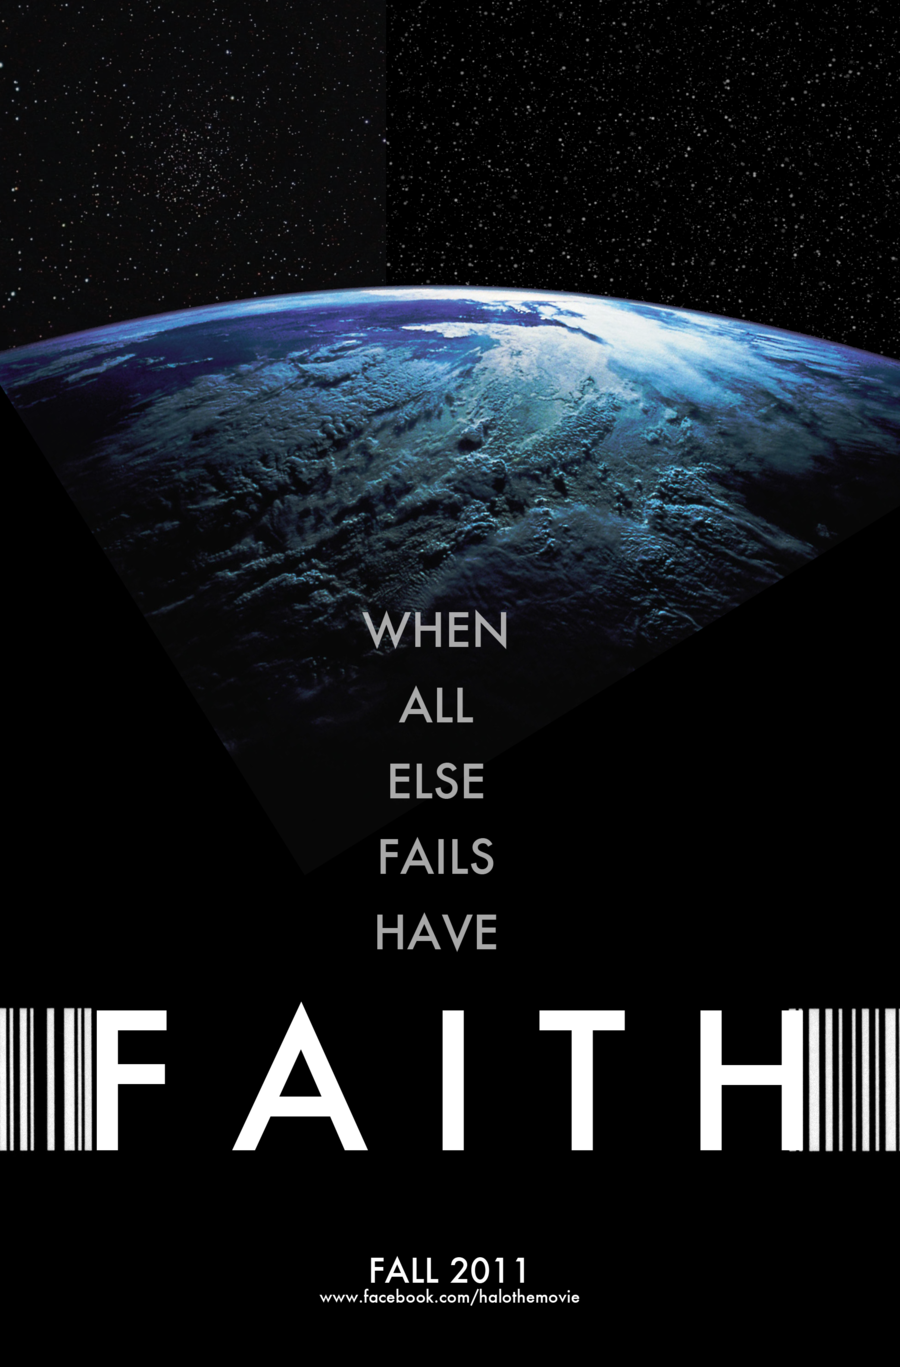  - Halo_faith_fan_poster_by_cydronix-d3f78gk